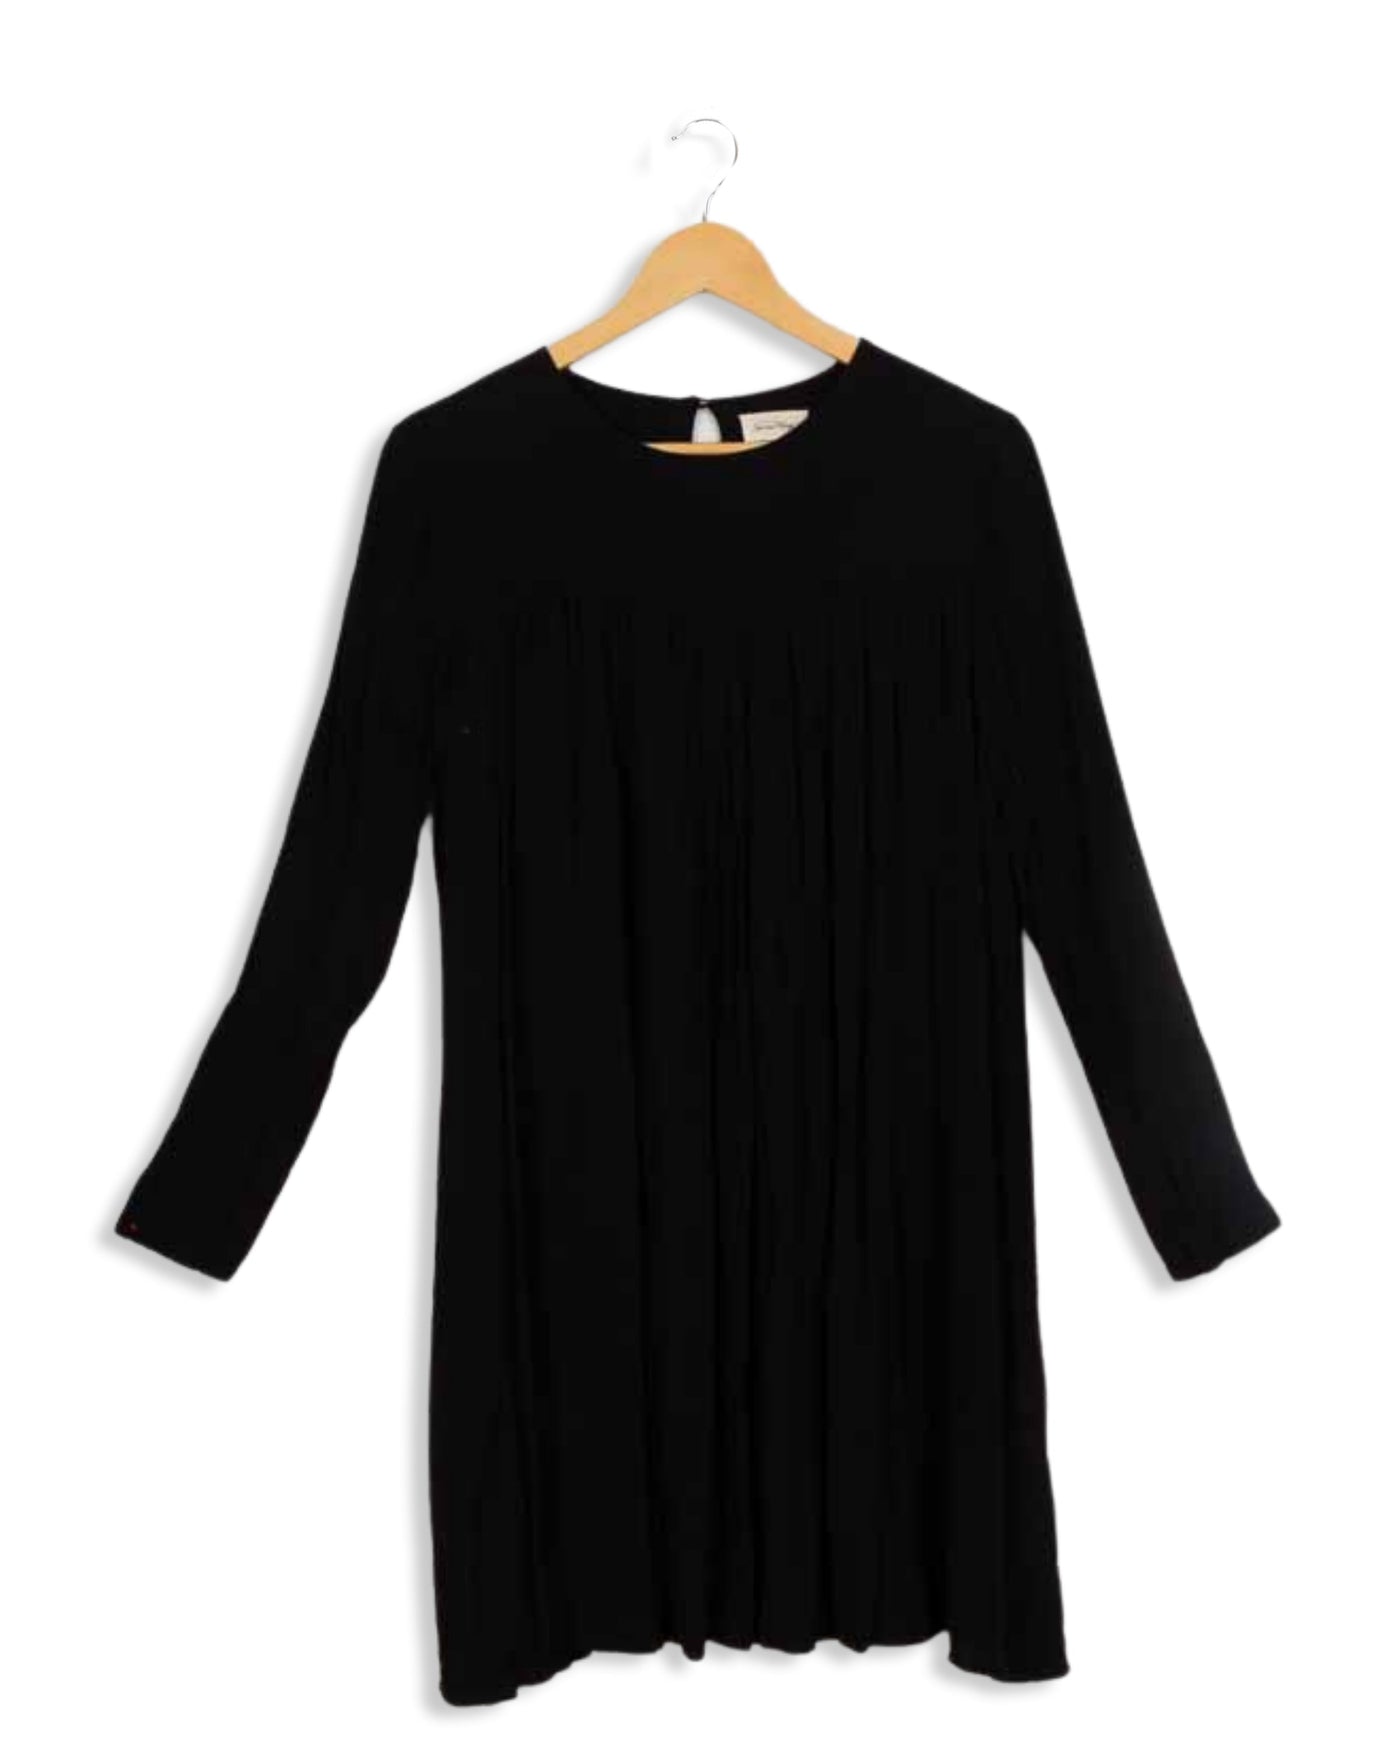 Robe noire - American Vintage - M